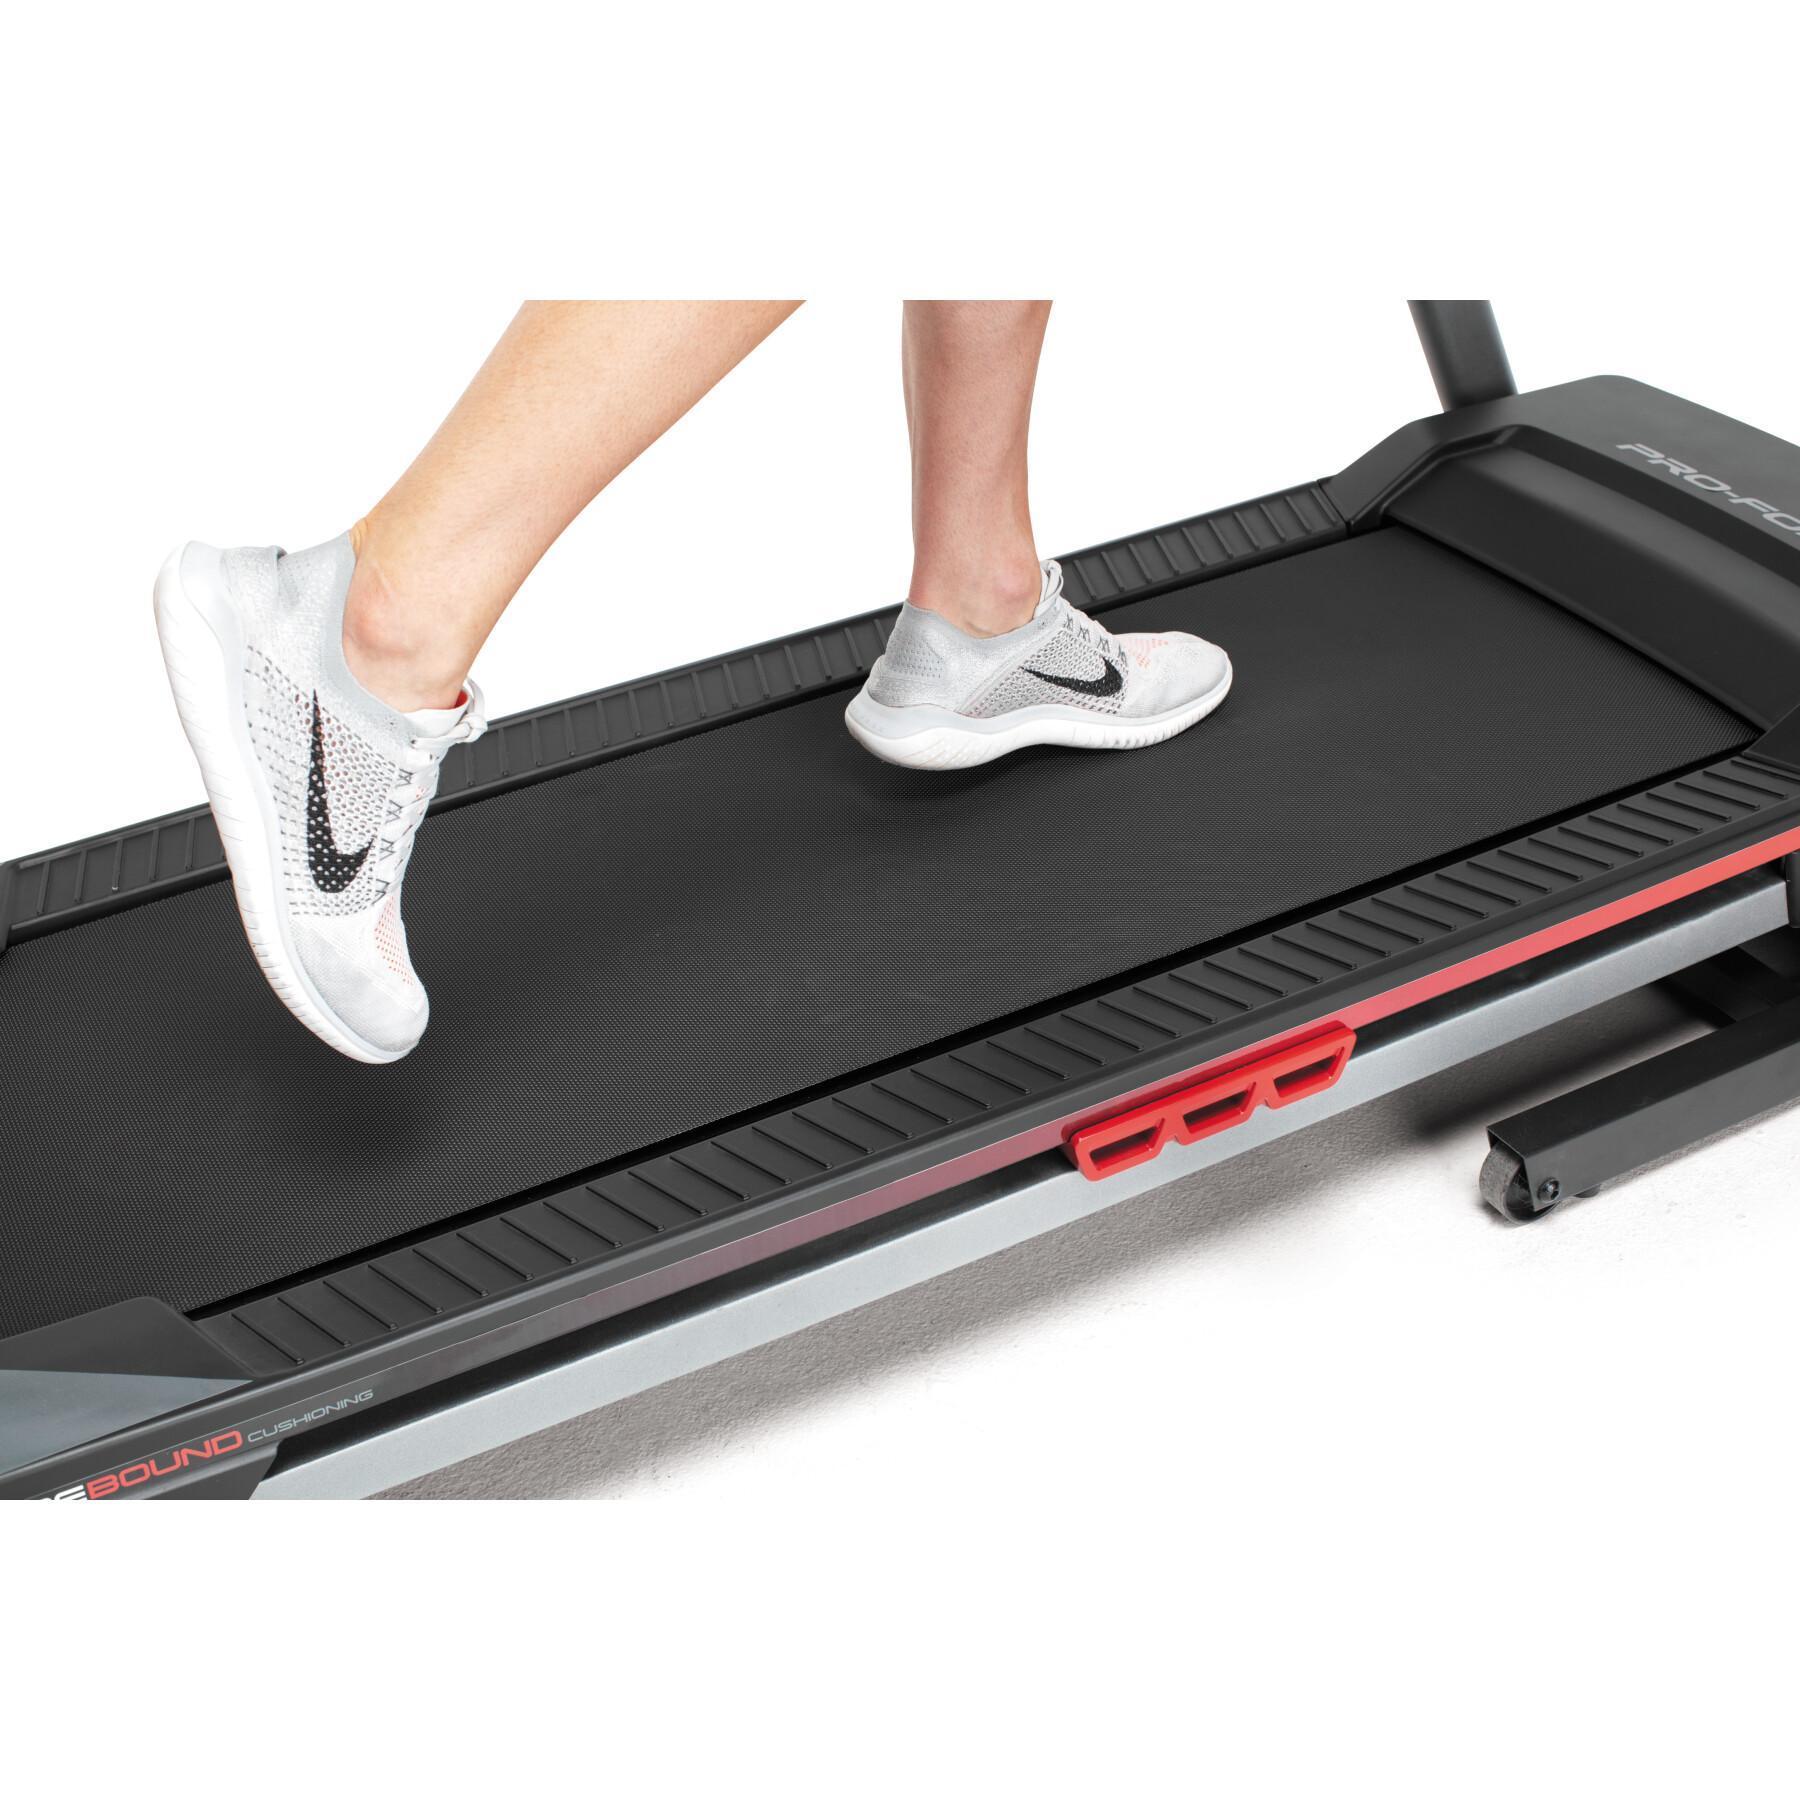 Treadmill Proform 305 CST